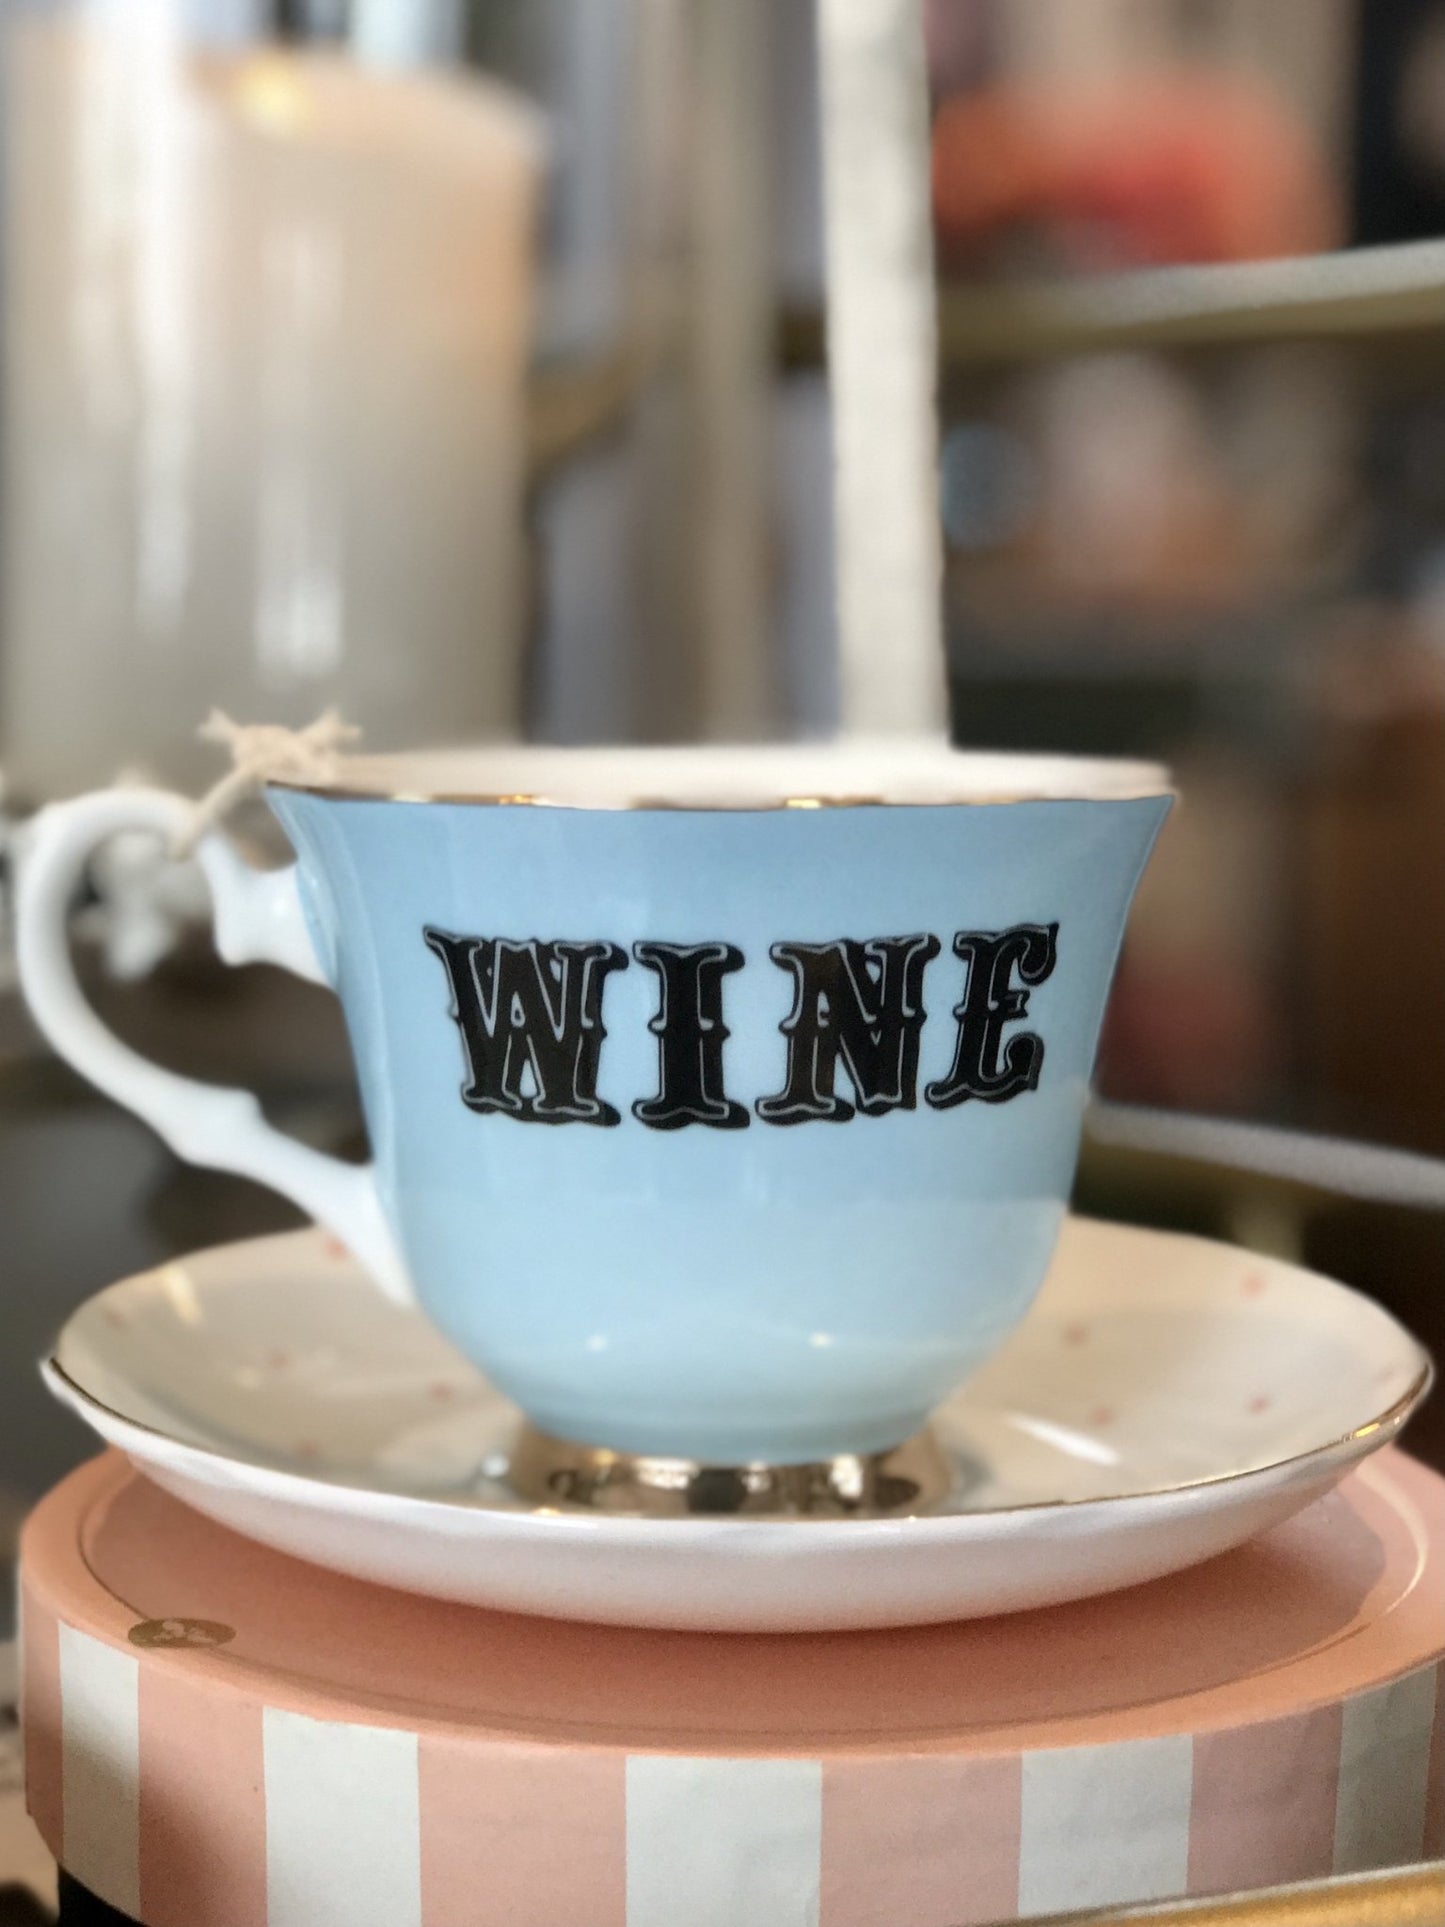 Yvonne Ellen Wine Teacup and Saucer - Royalties